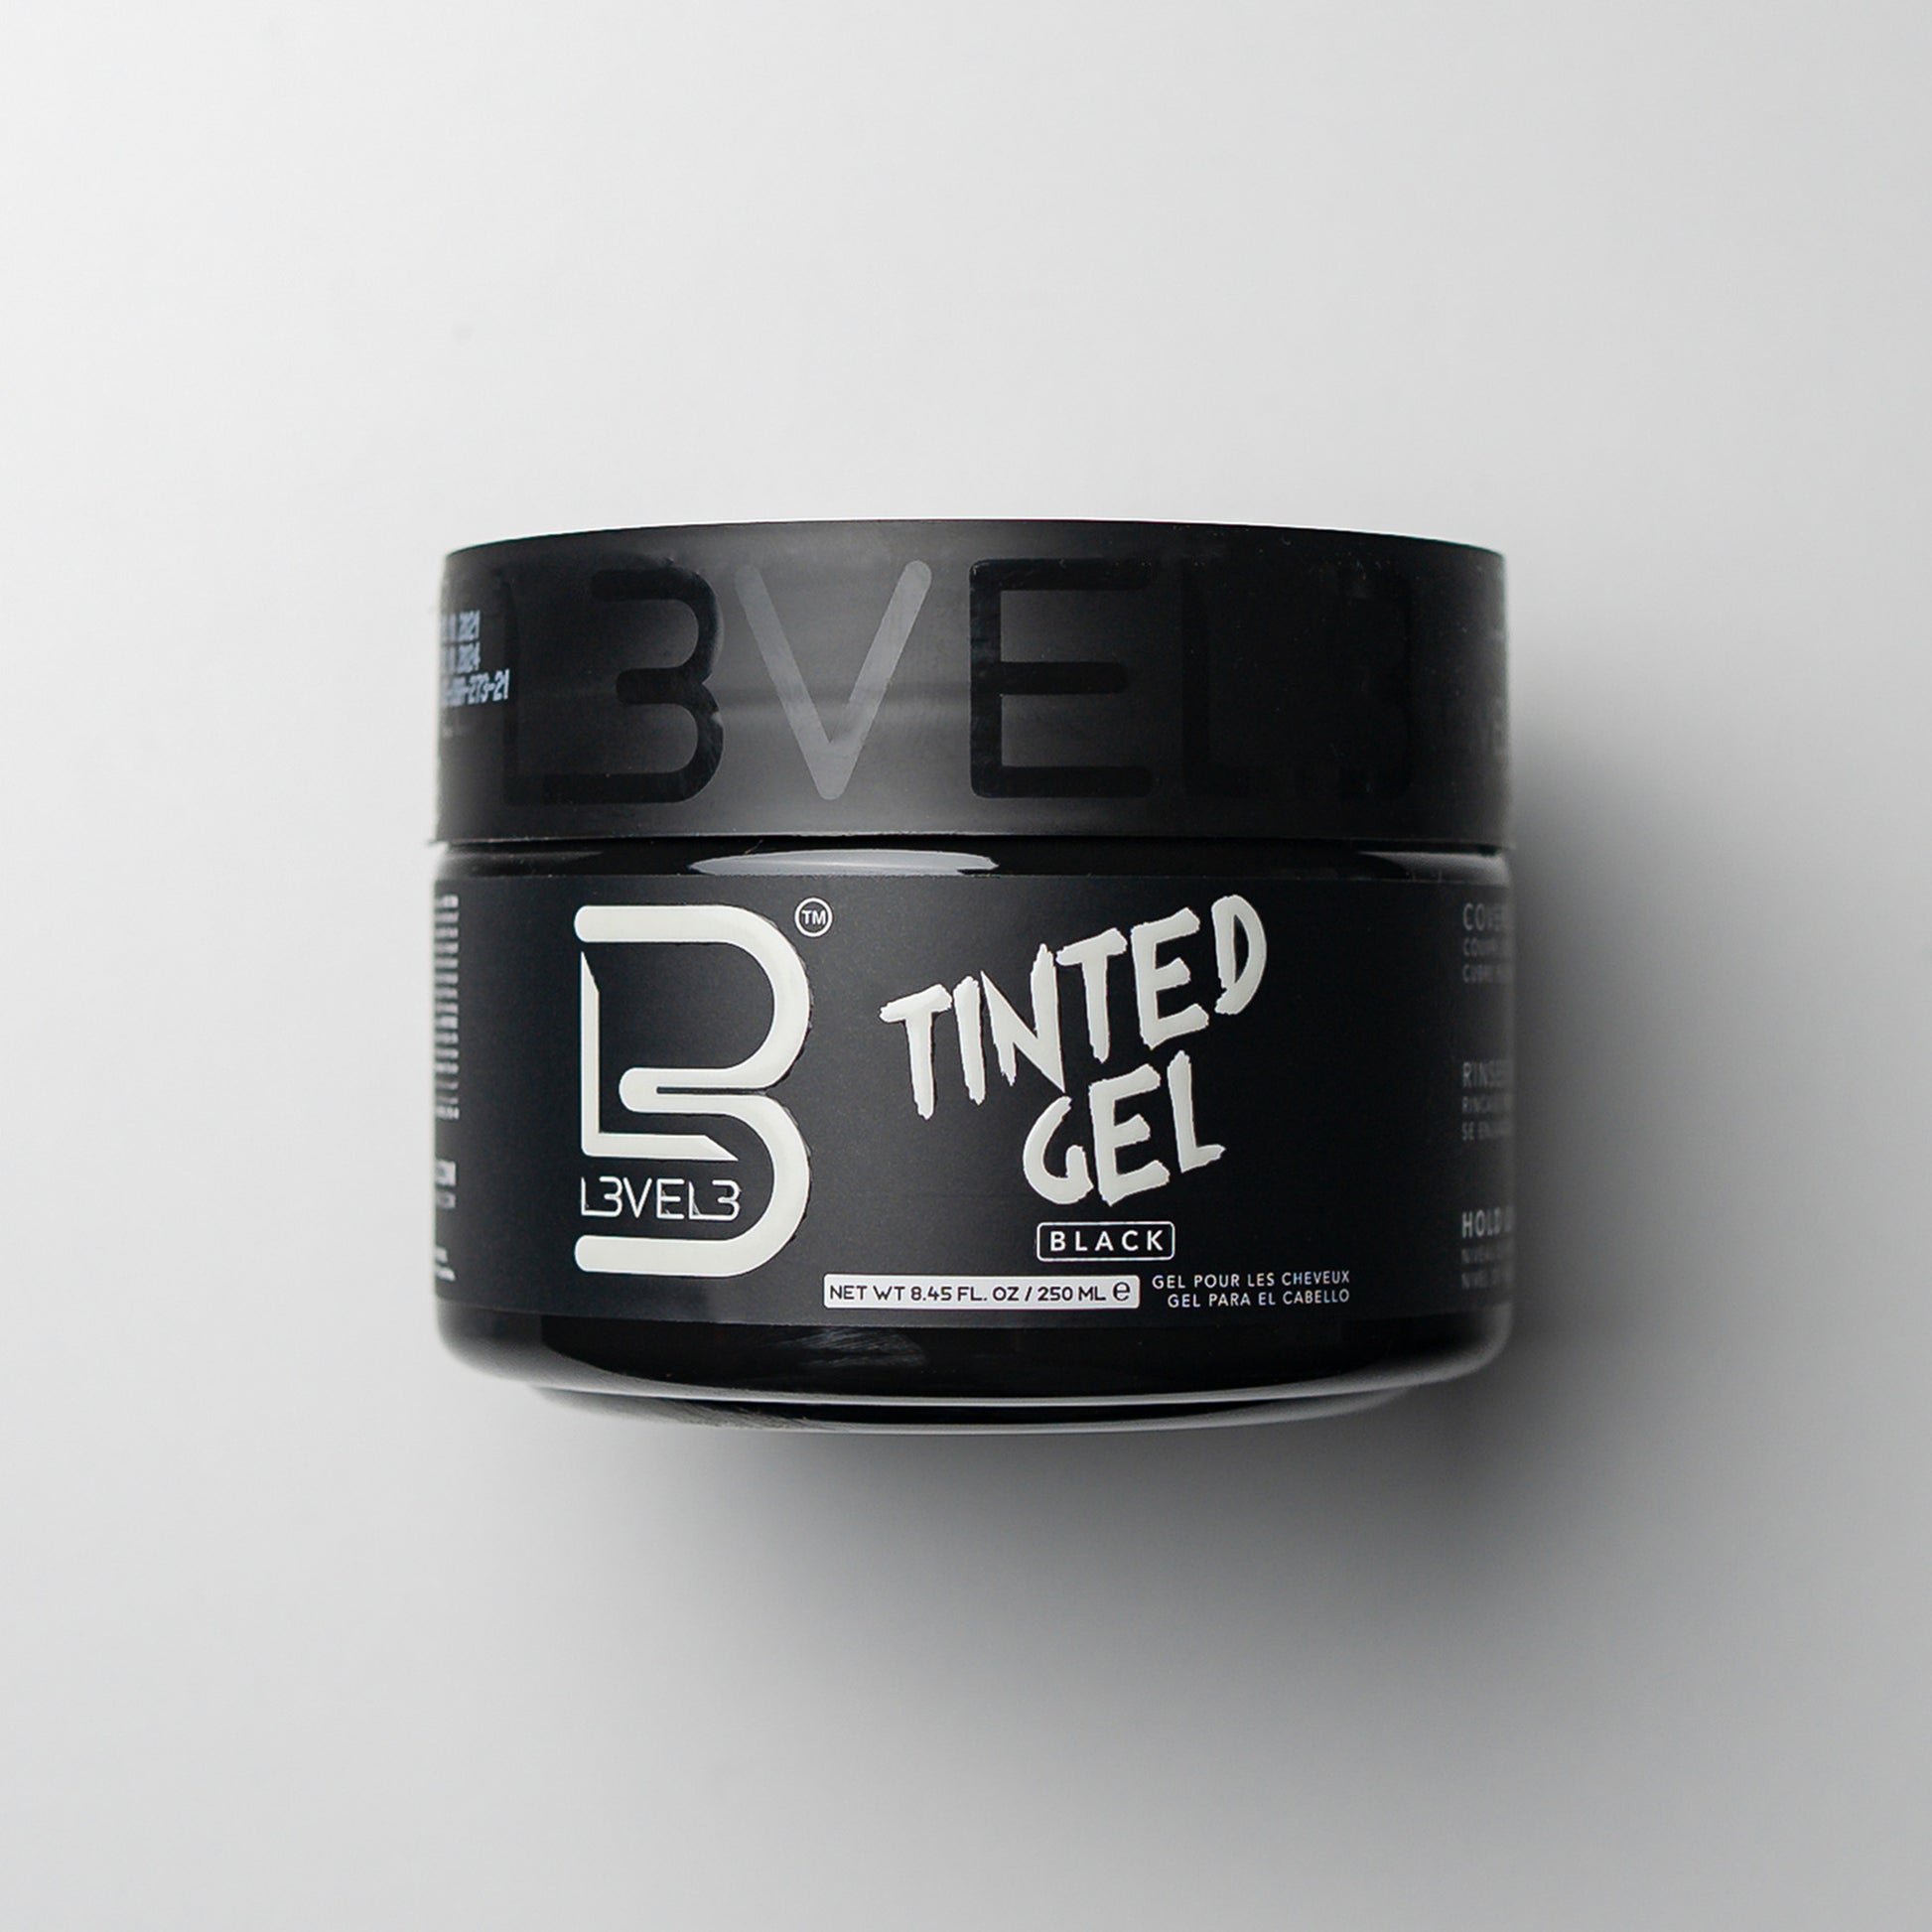 Level 3 Black tinted Gel